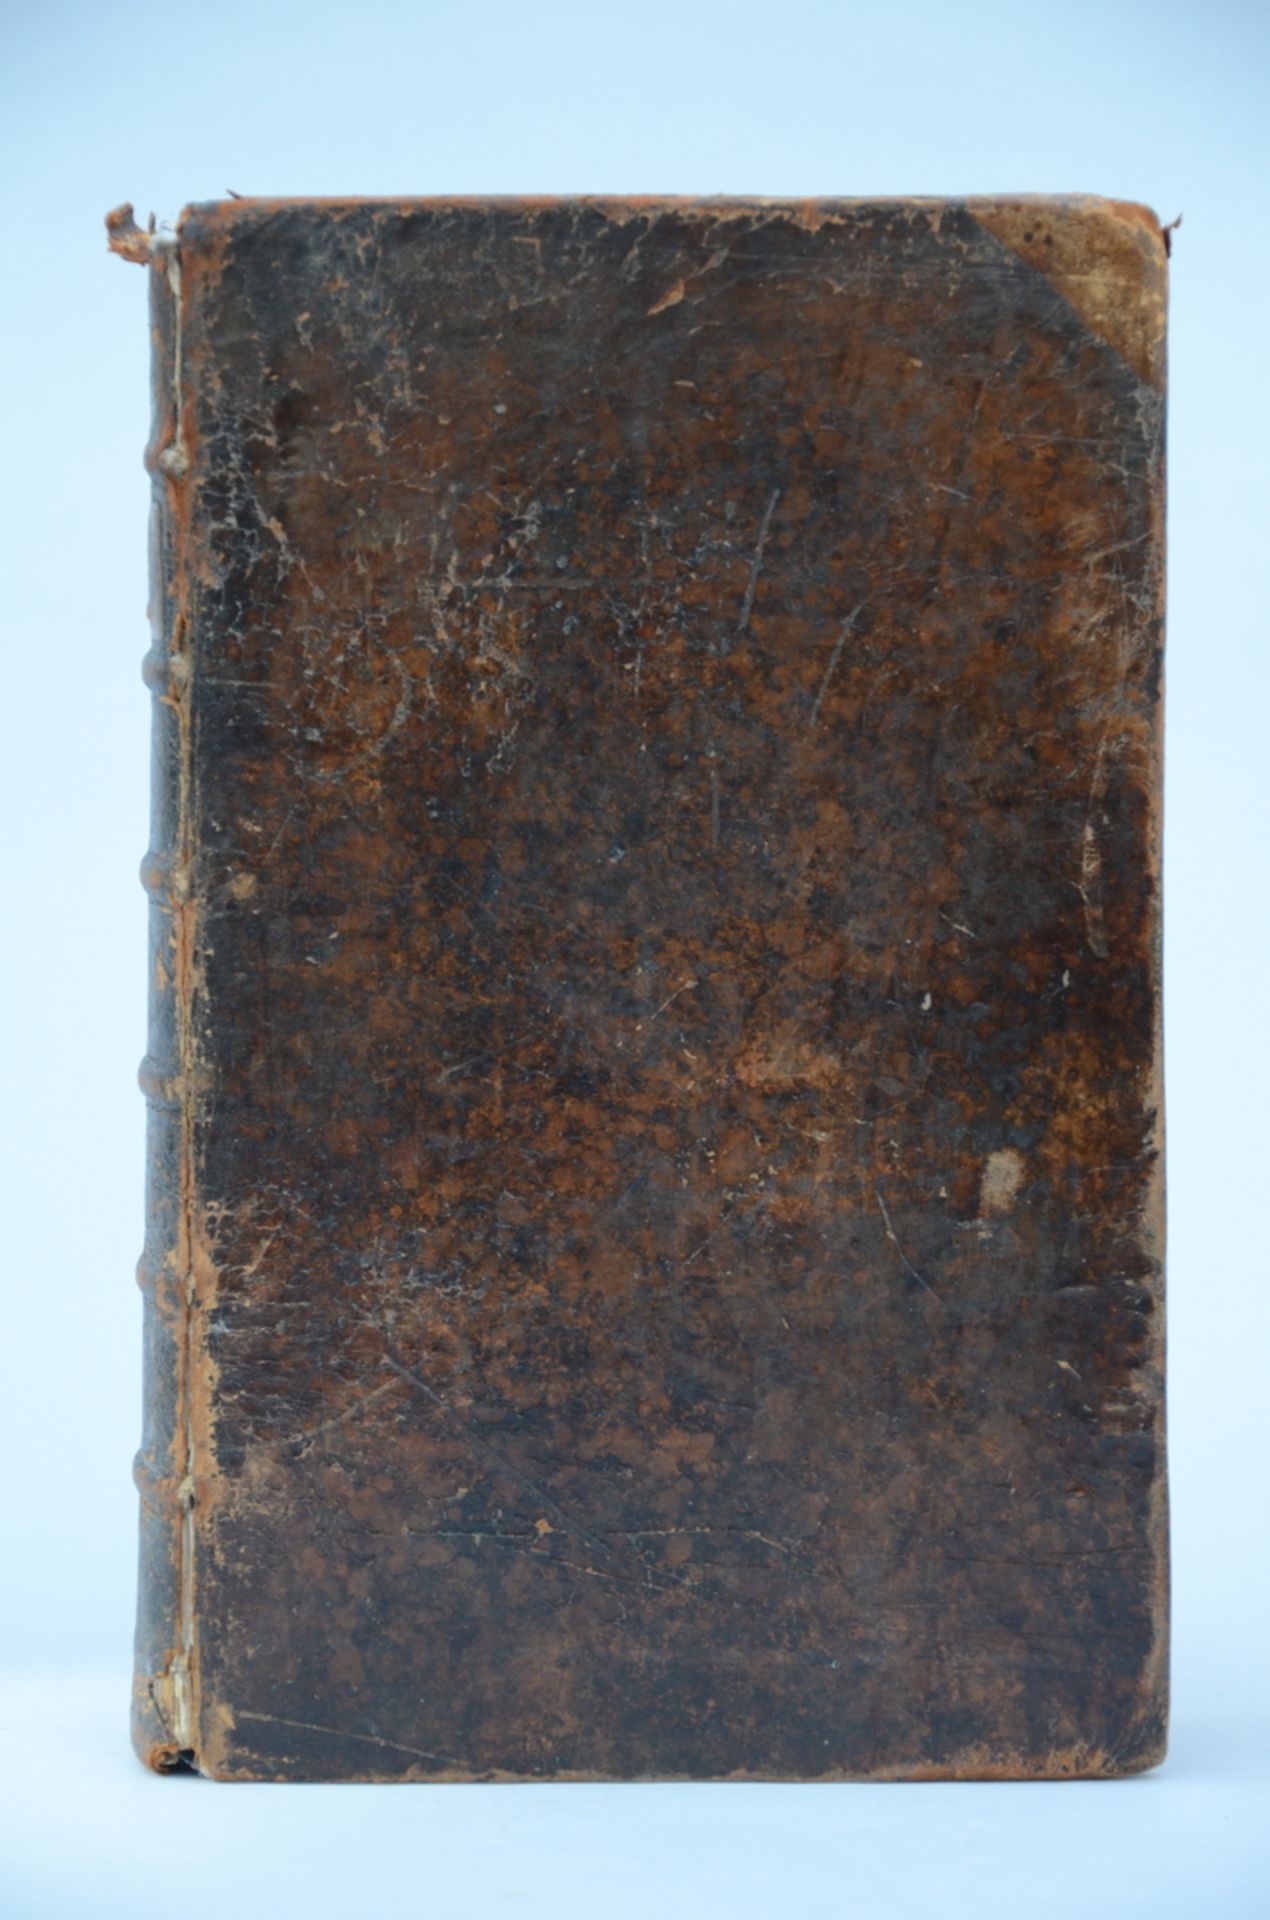 Martinum Van Overbeke: book 'Biblia Sacra', 18th century (42x27cm)